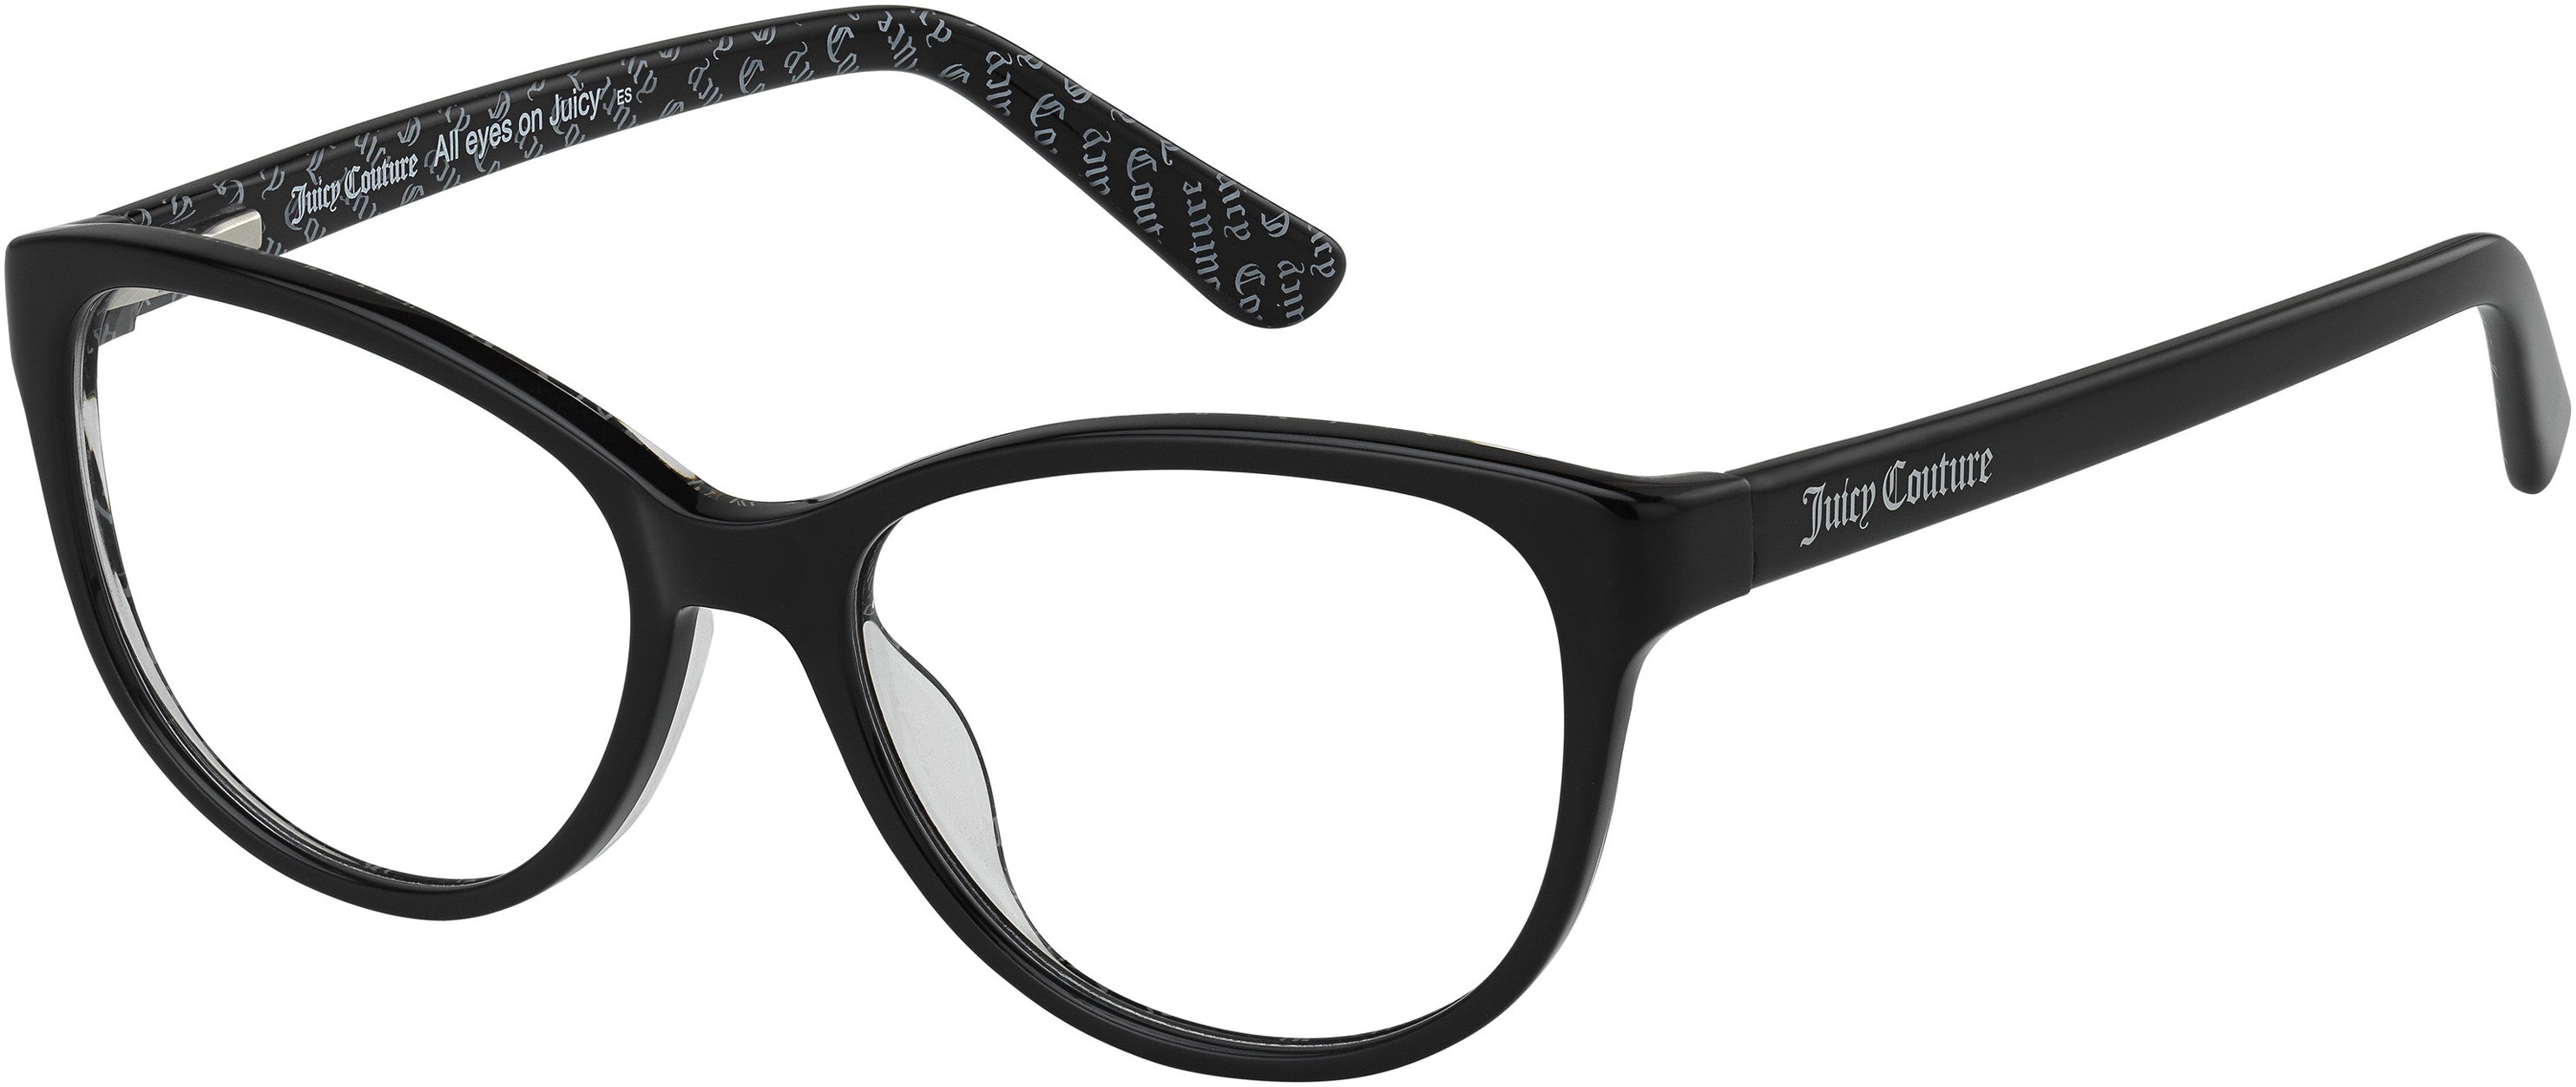 Juicy Couture Juicy 300 Rectangular Eyeglasses 0807-0807  Black (00 Demo Lens)